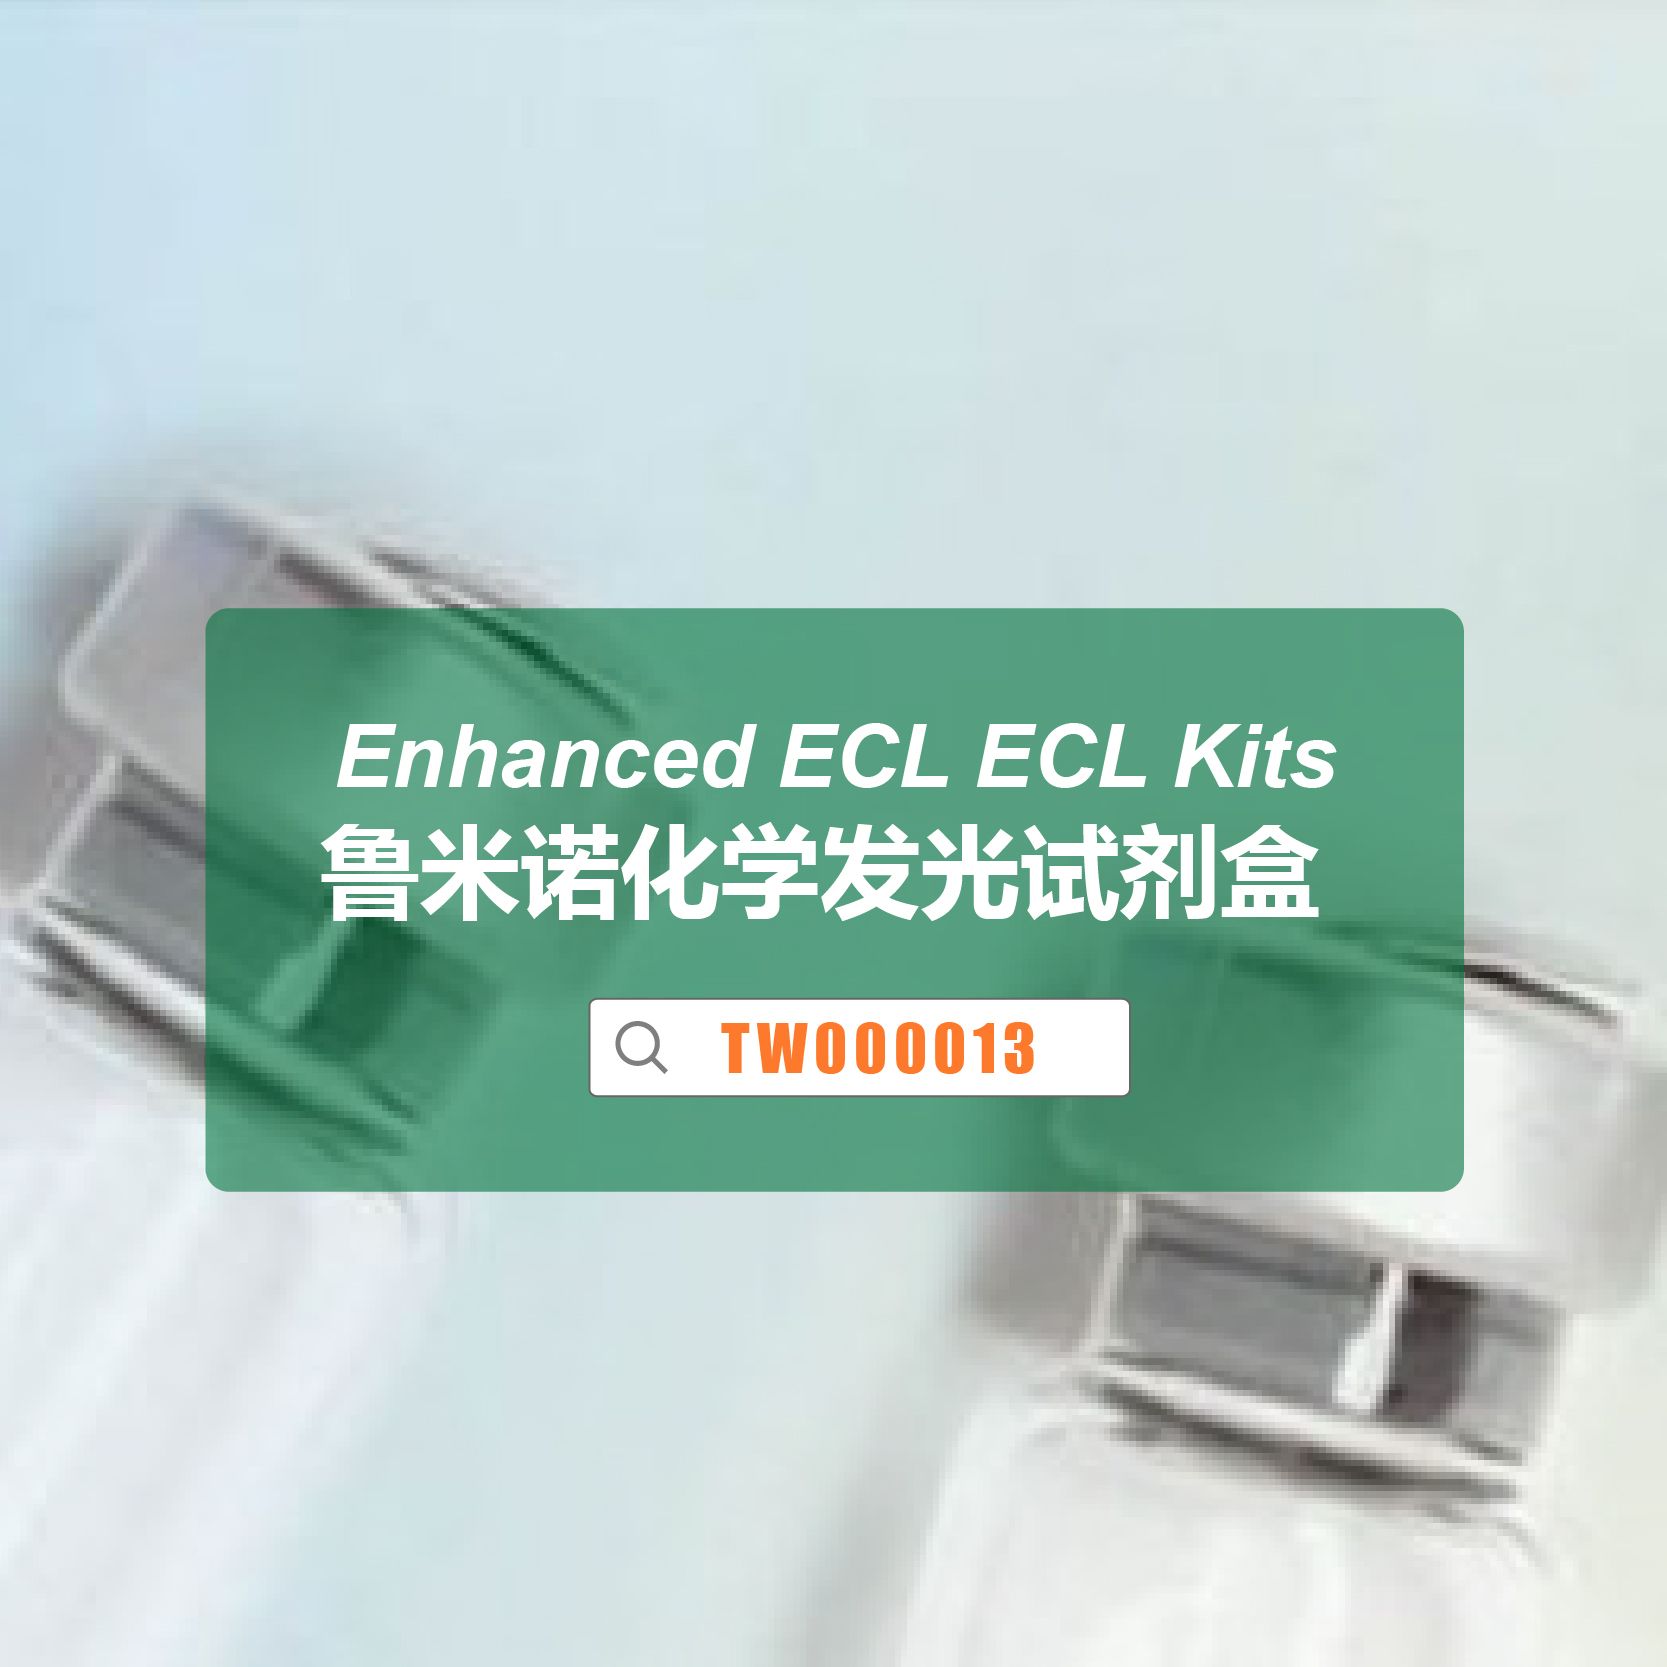 Enhanced ECL ECL Kits